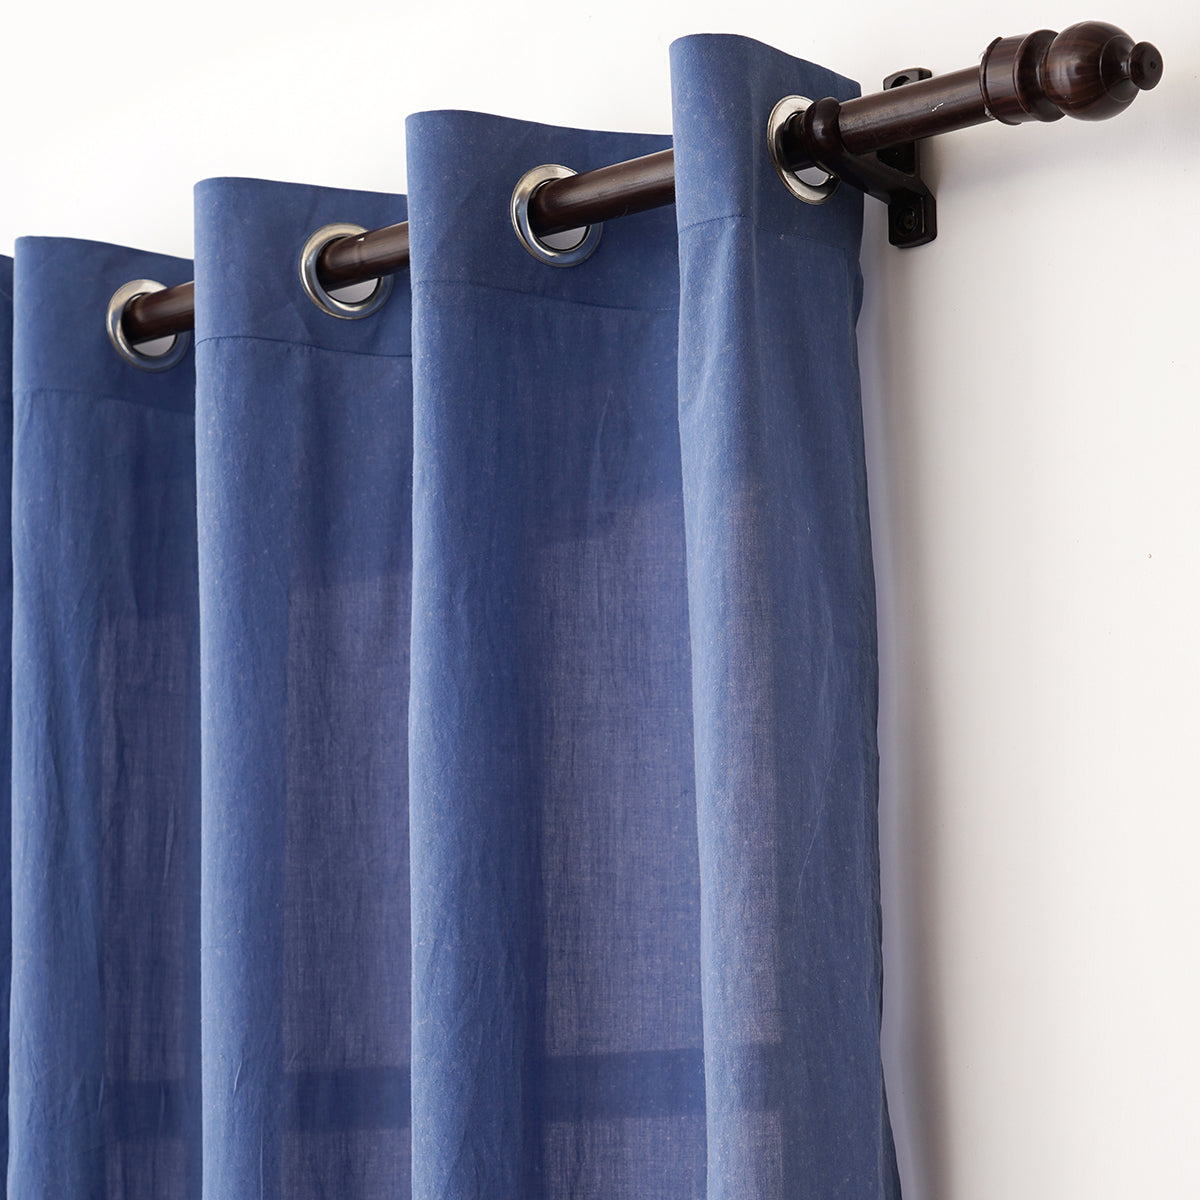 Curtain, Sheer cotton voile, denim blue, window panel, home decor, sizes available